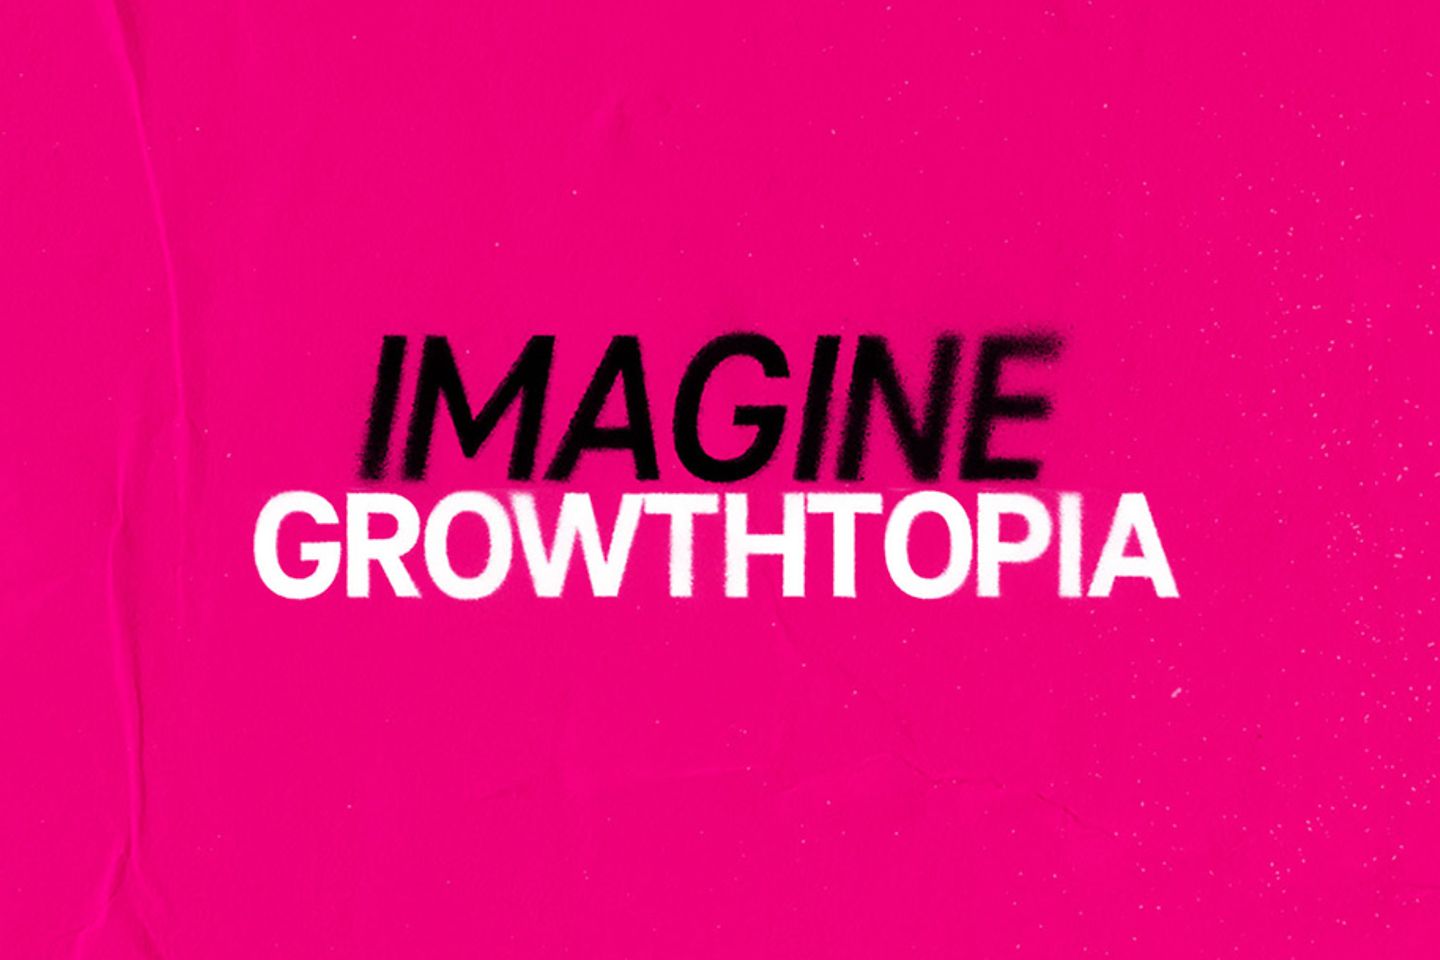 Image with typo “Create your growthtopia”